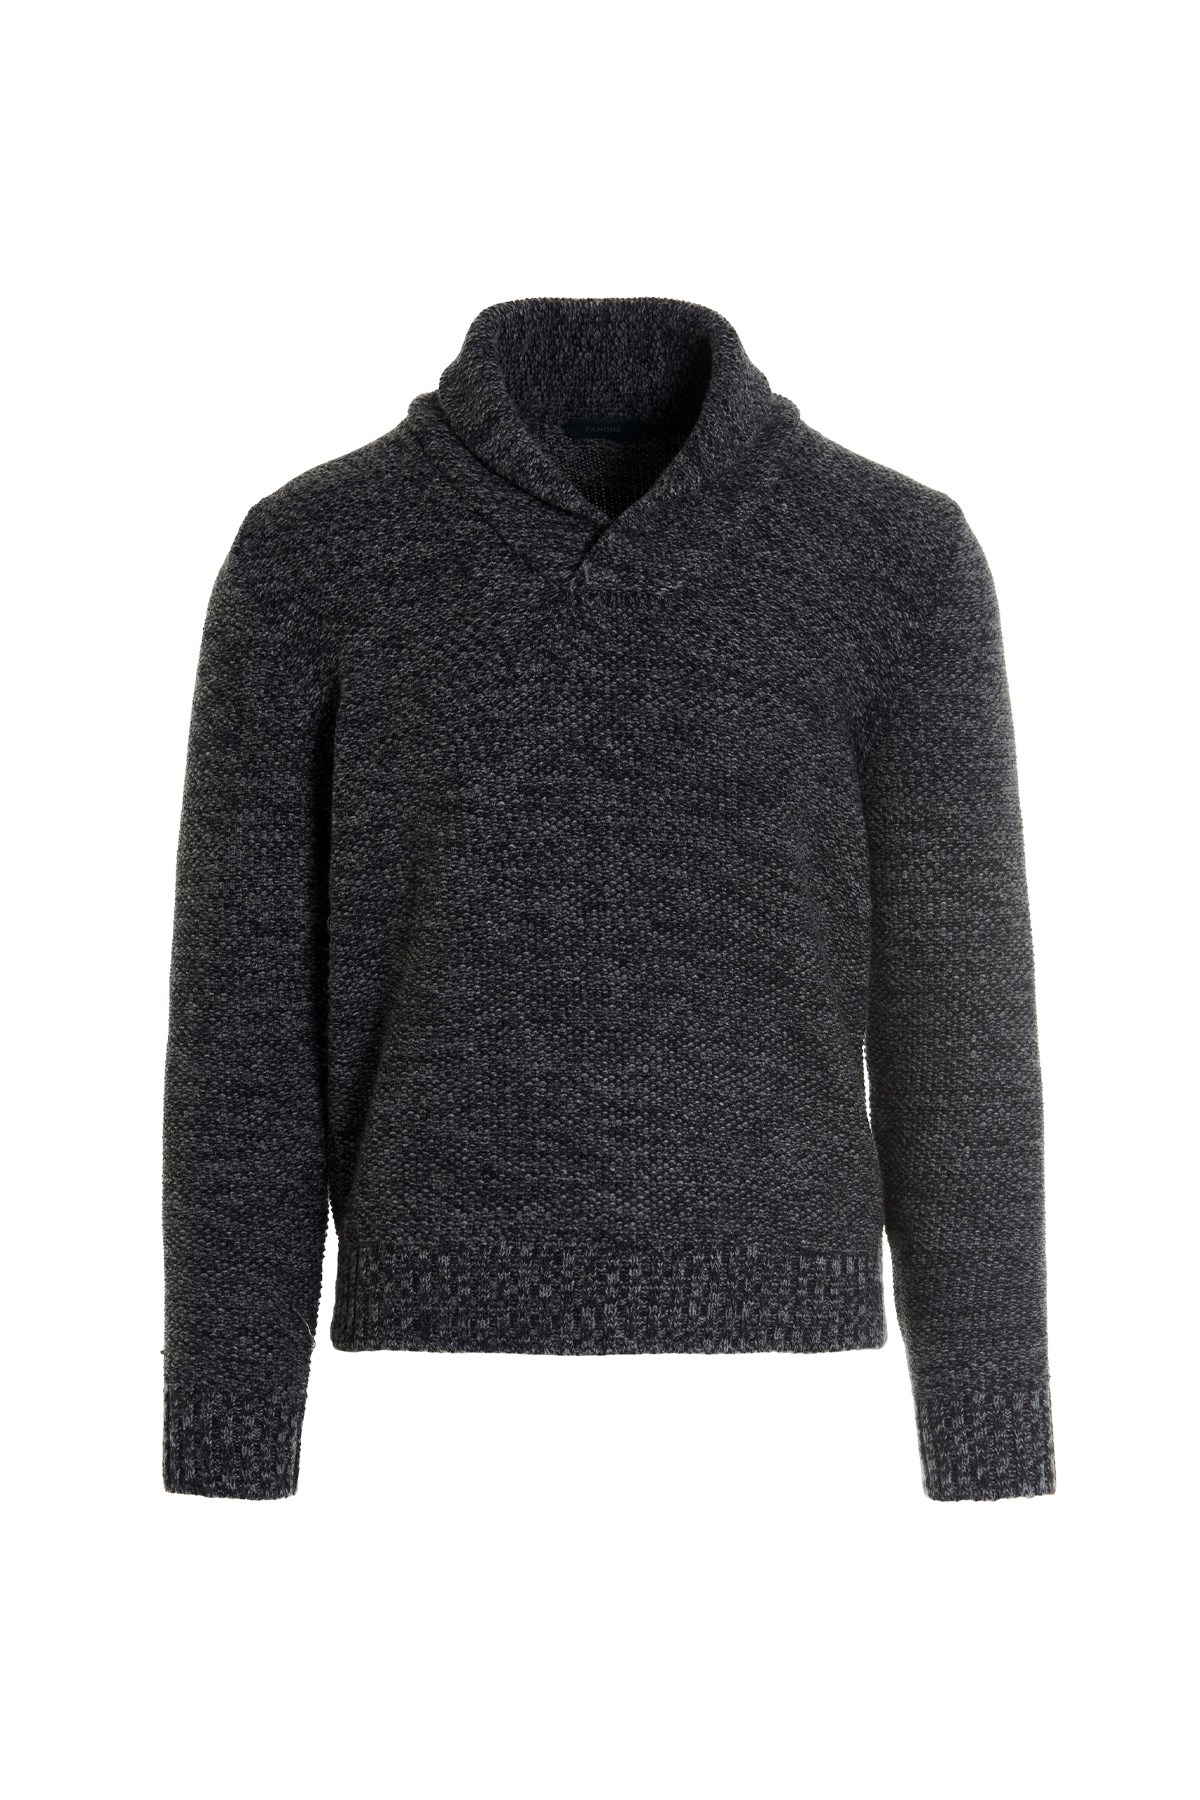 ZANONE 'Pescatore’ Hooded Sweater